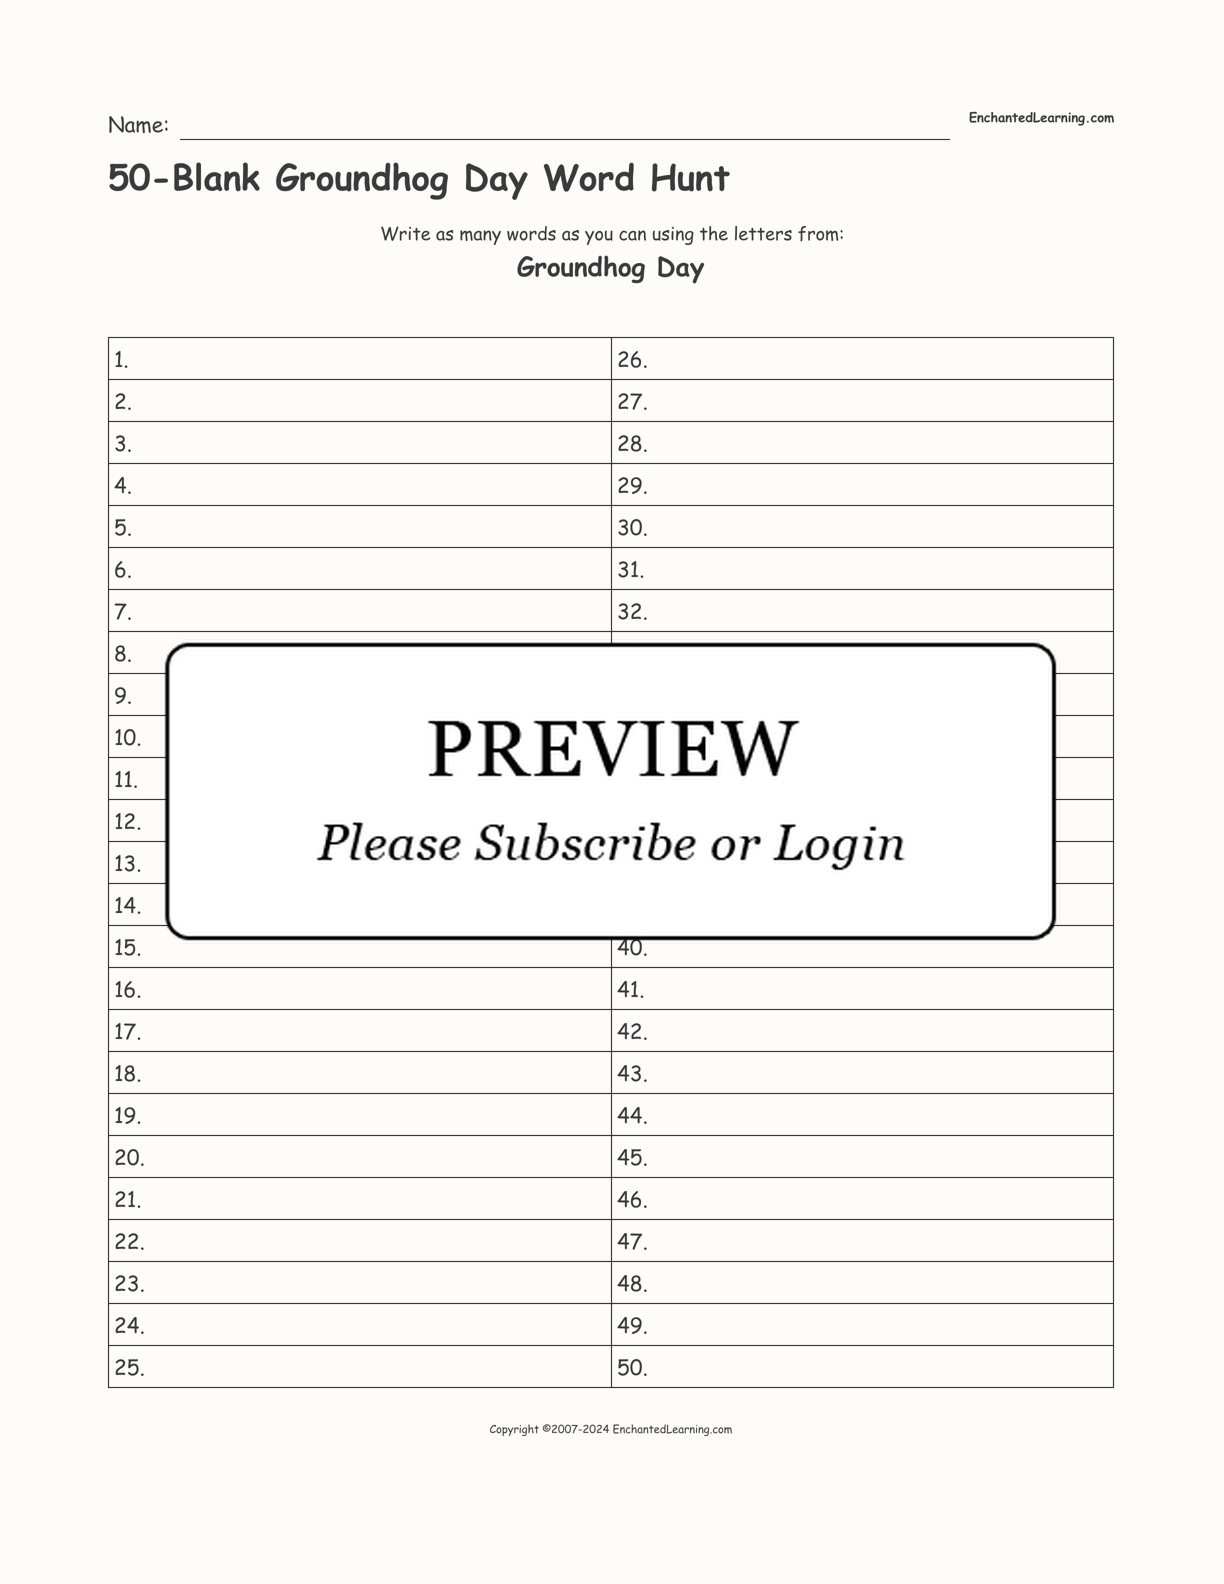 50-Blank Groundhog Day Word Hunt interactive worksheet page 1